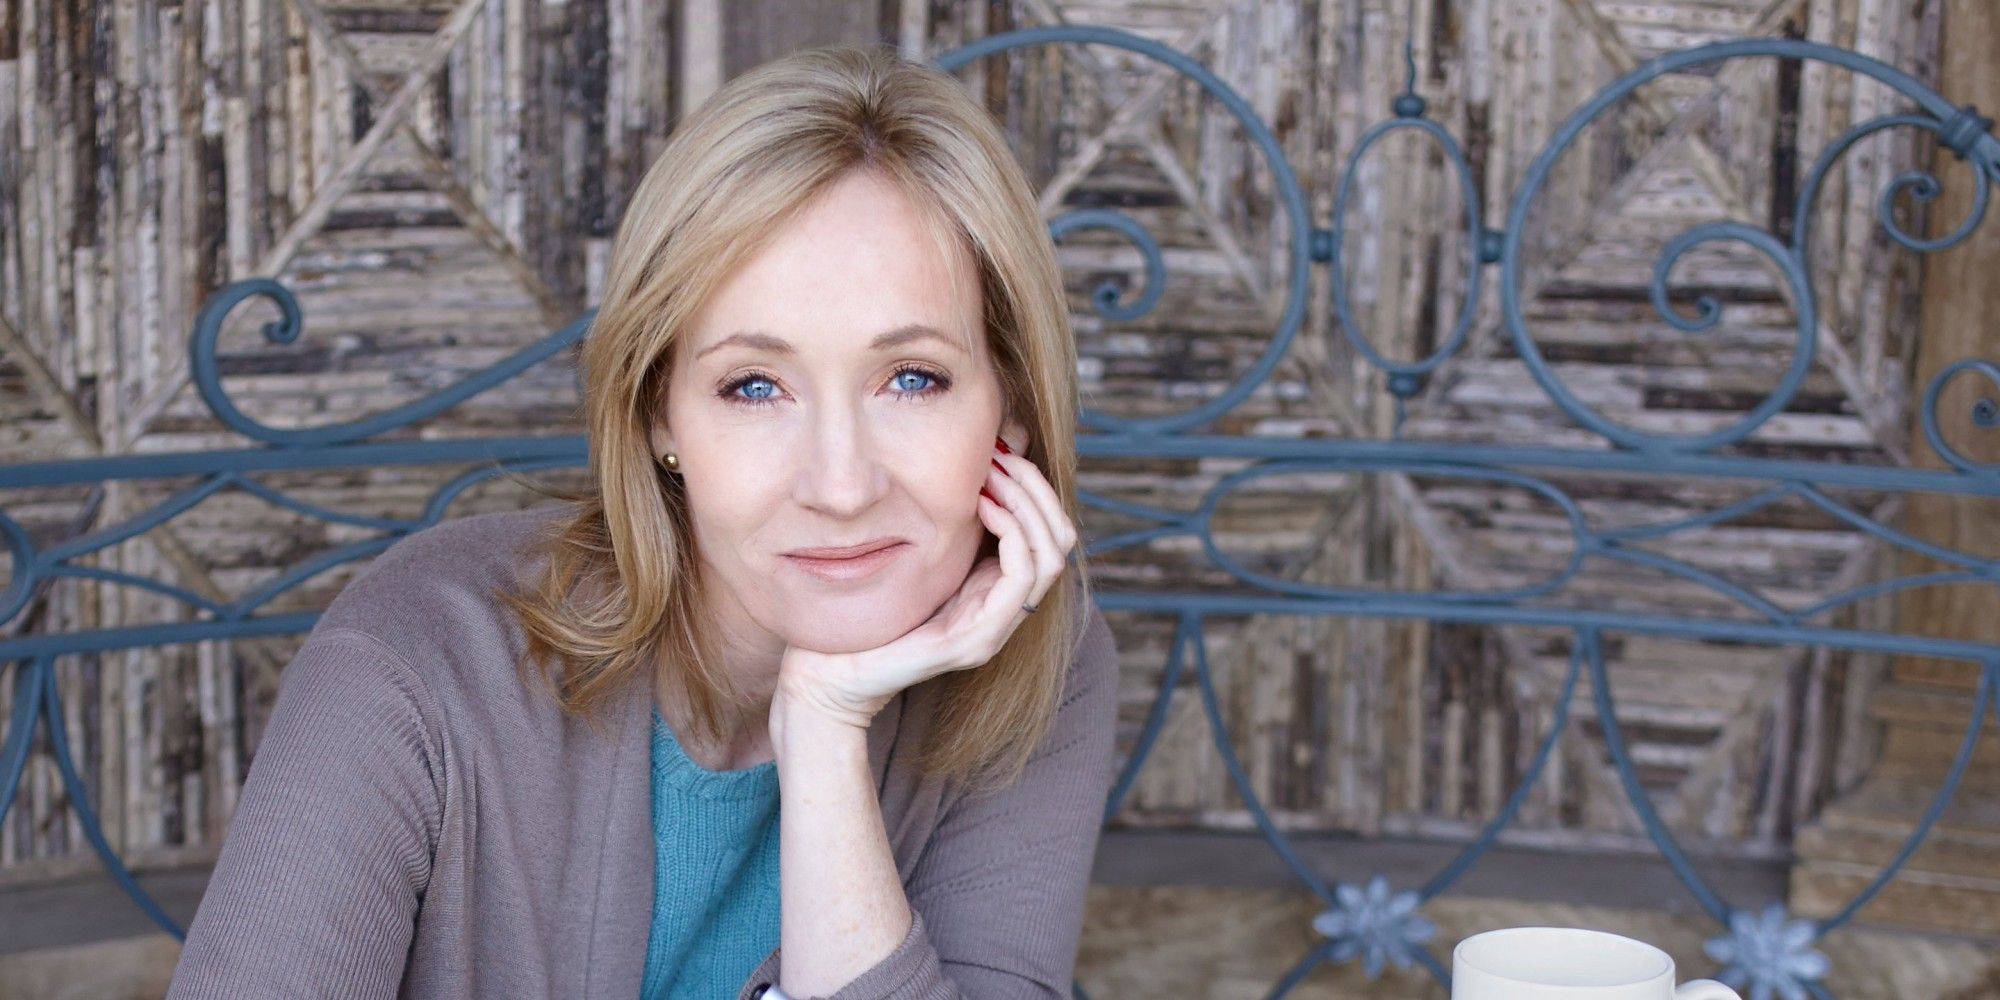  Drehbuchautor J.K. Rowling